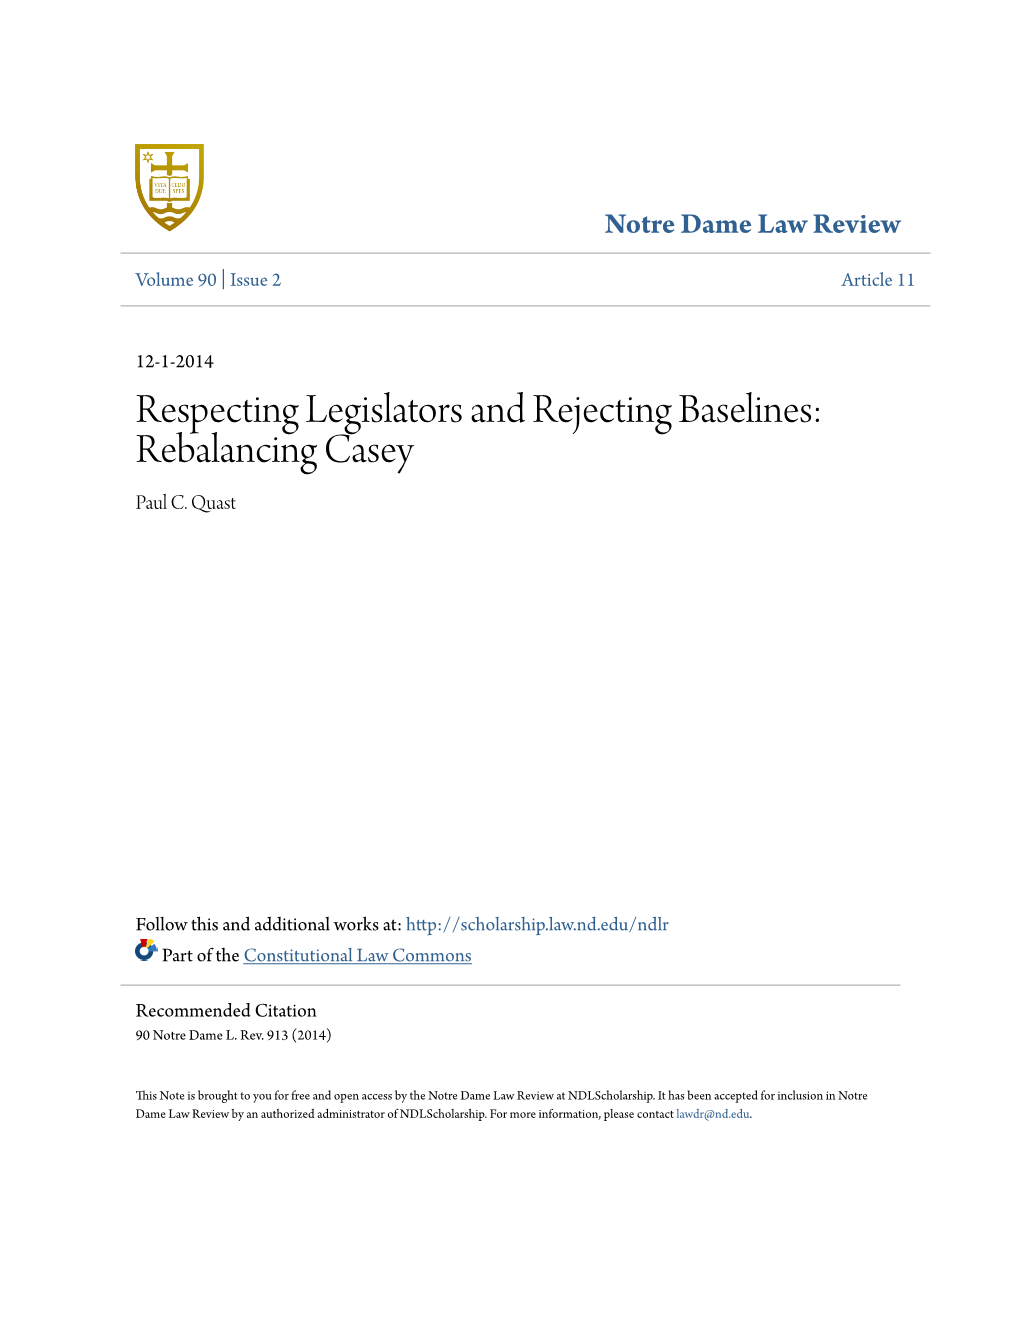 Respecting Legislators and Rejecting Baselines: Rebalancing Casey Paul C